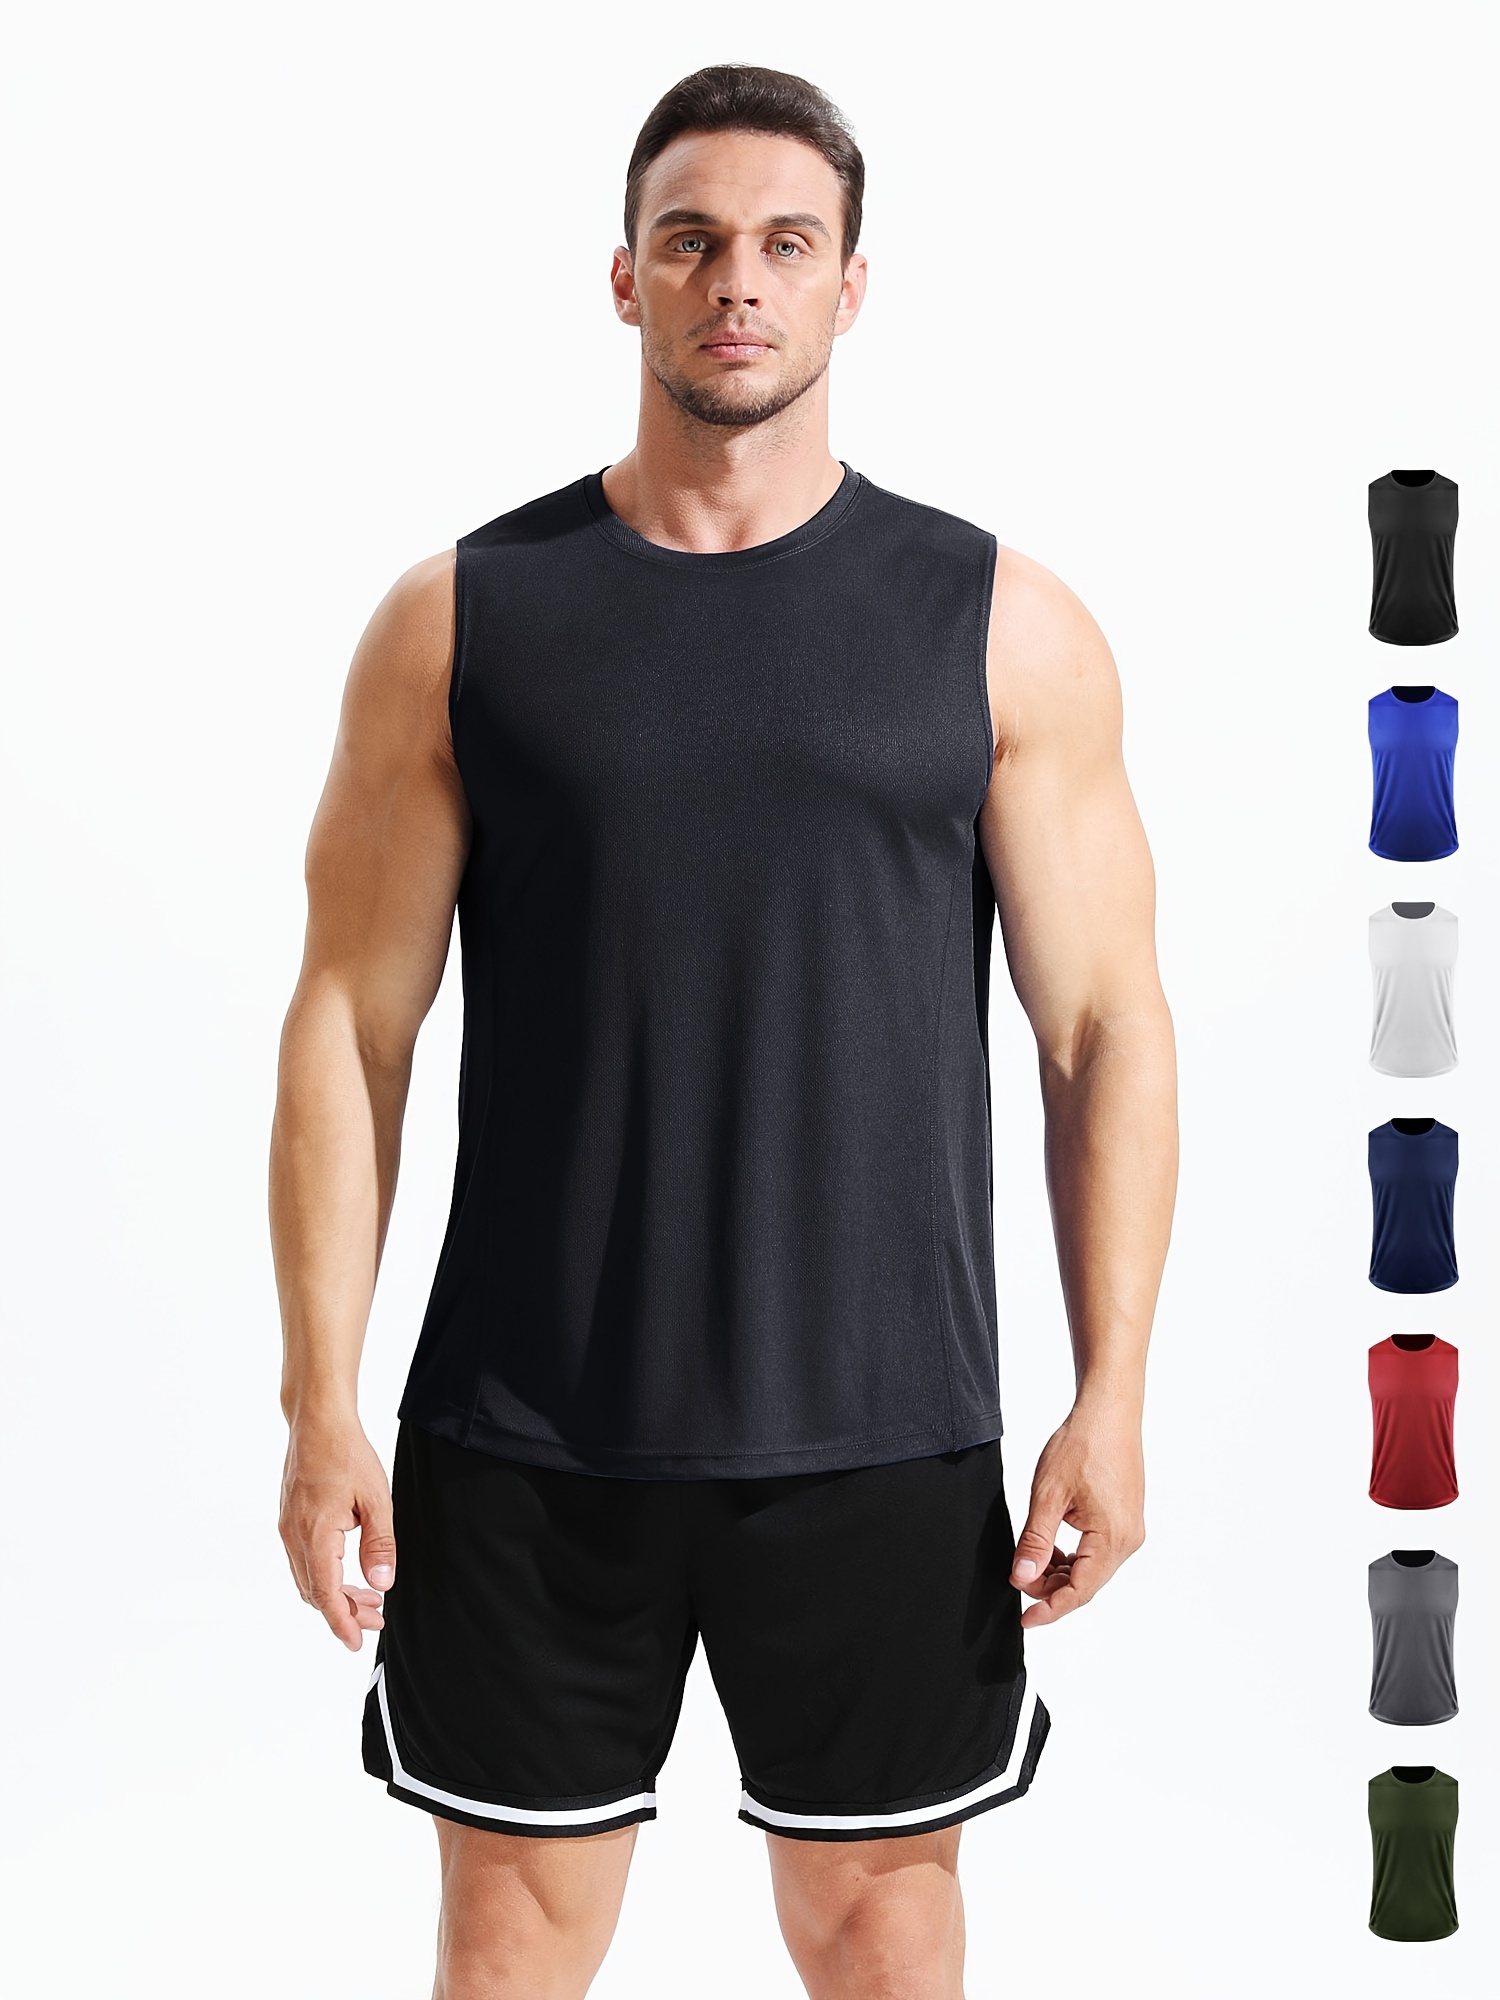 Phantasy camiseta muscular de verano para hombre, Tops de color